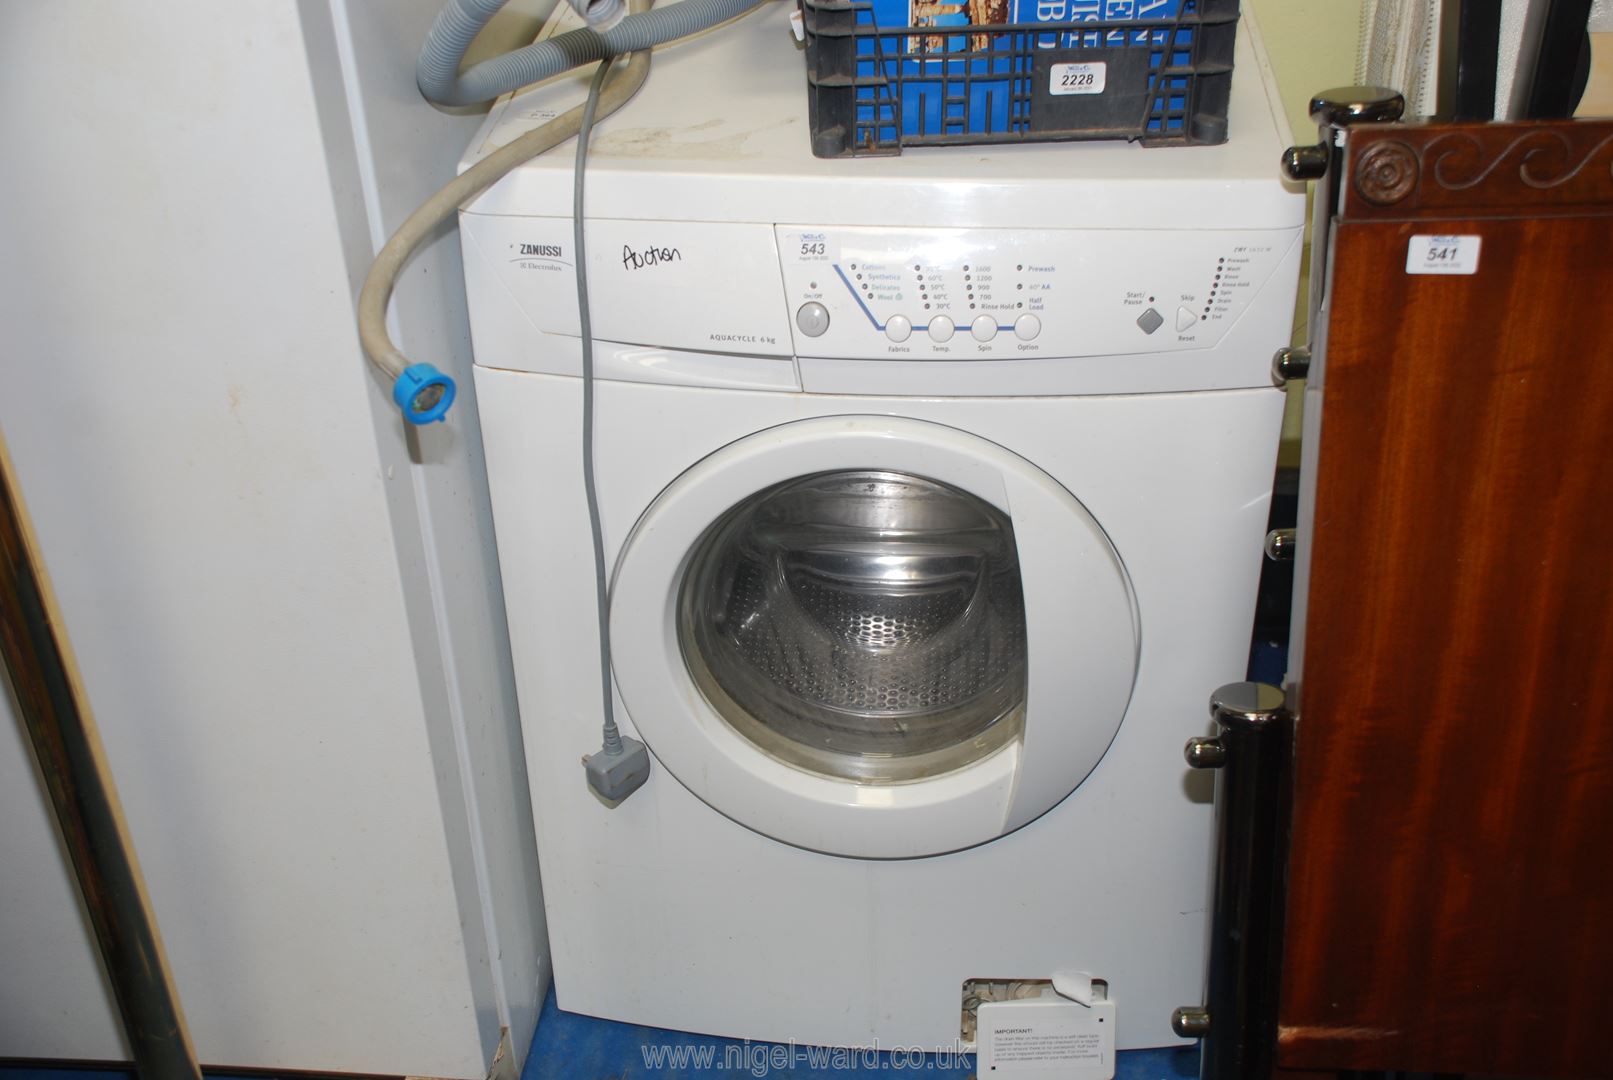 A Zanussi Aquacycle 6kg washing machine.